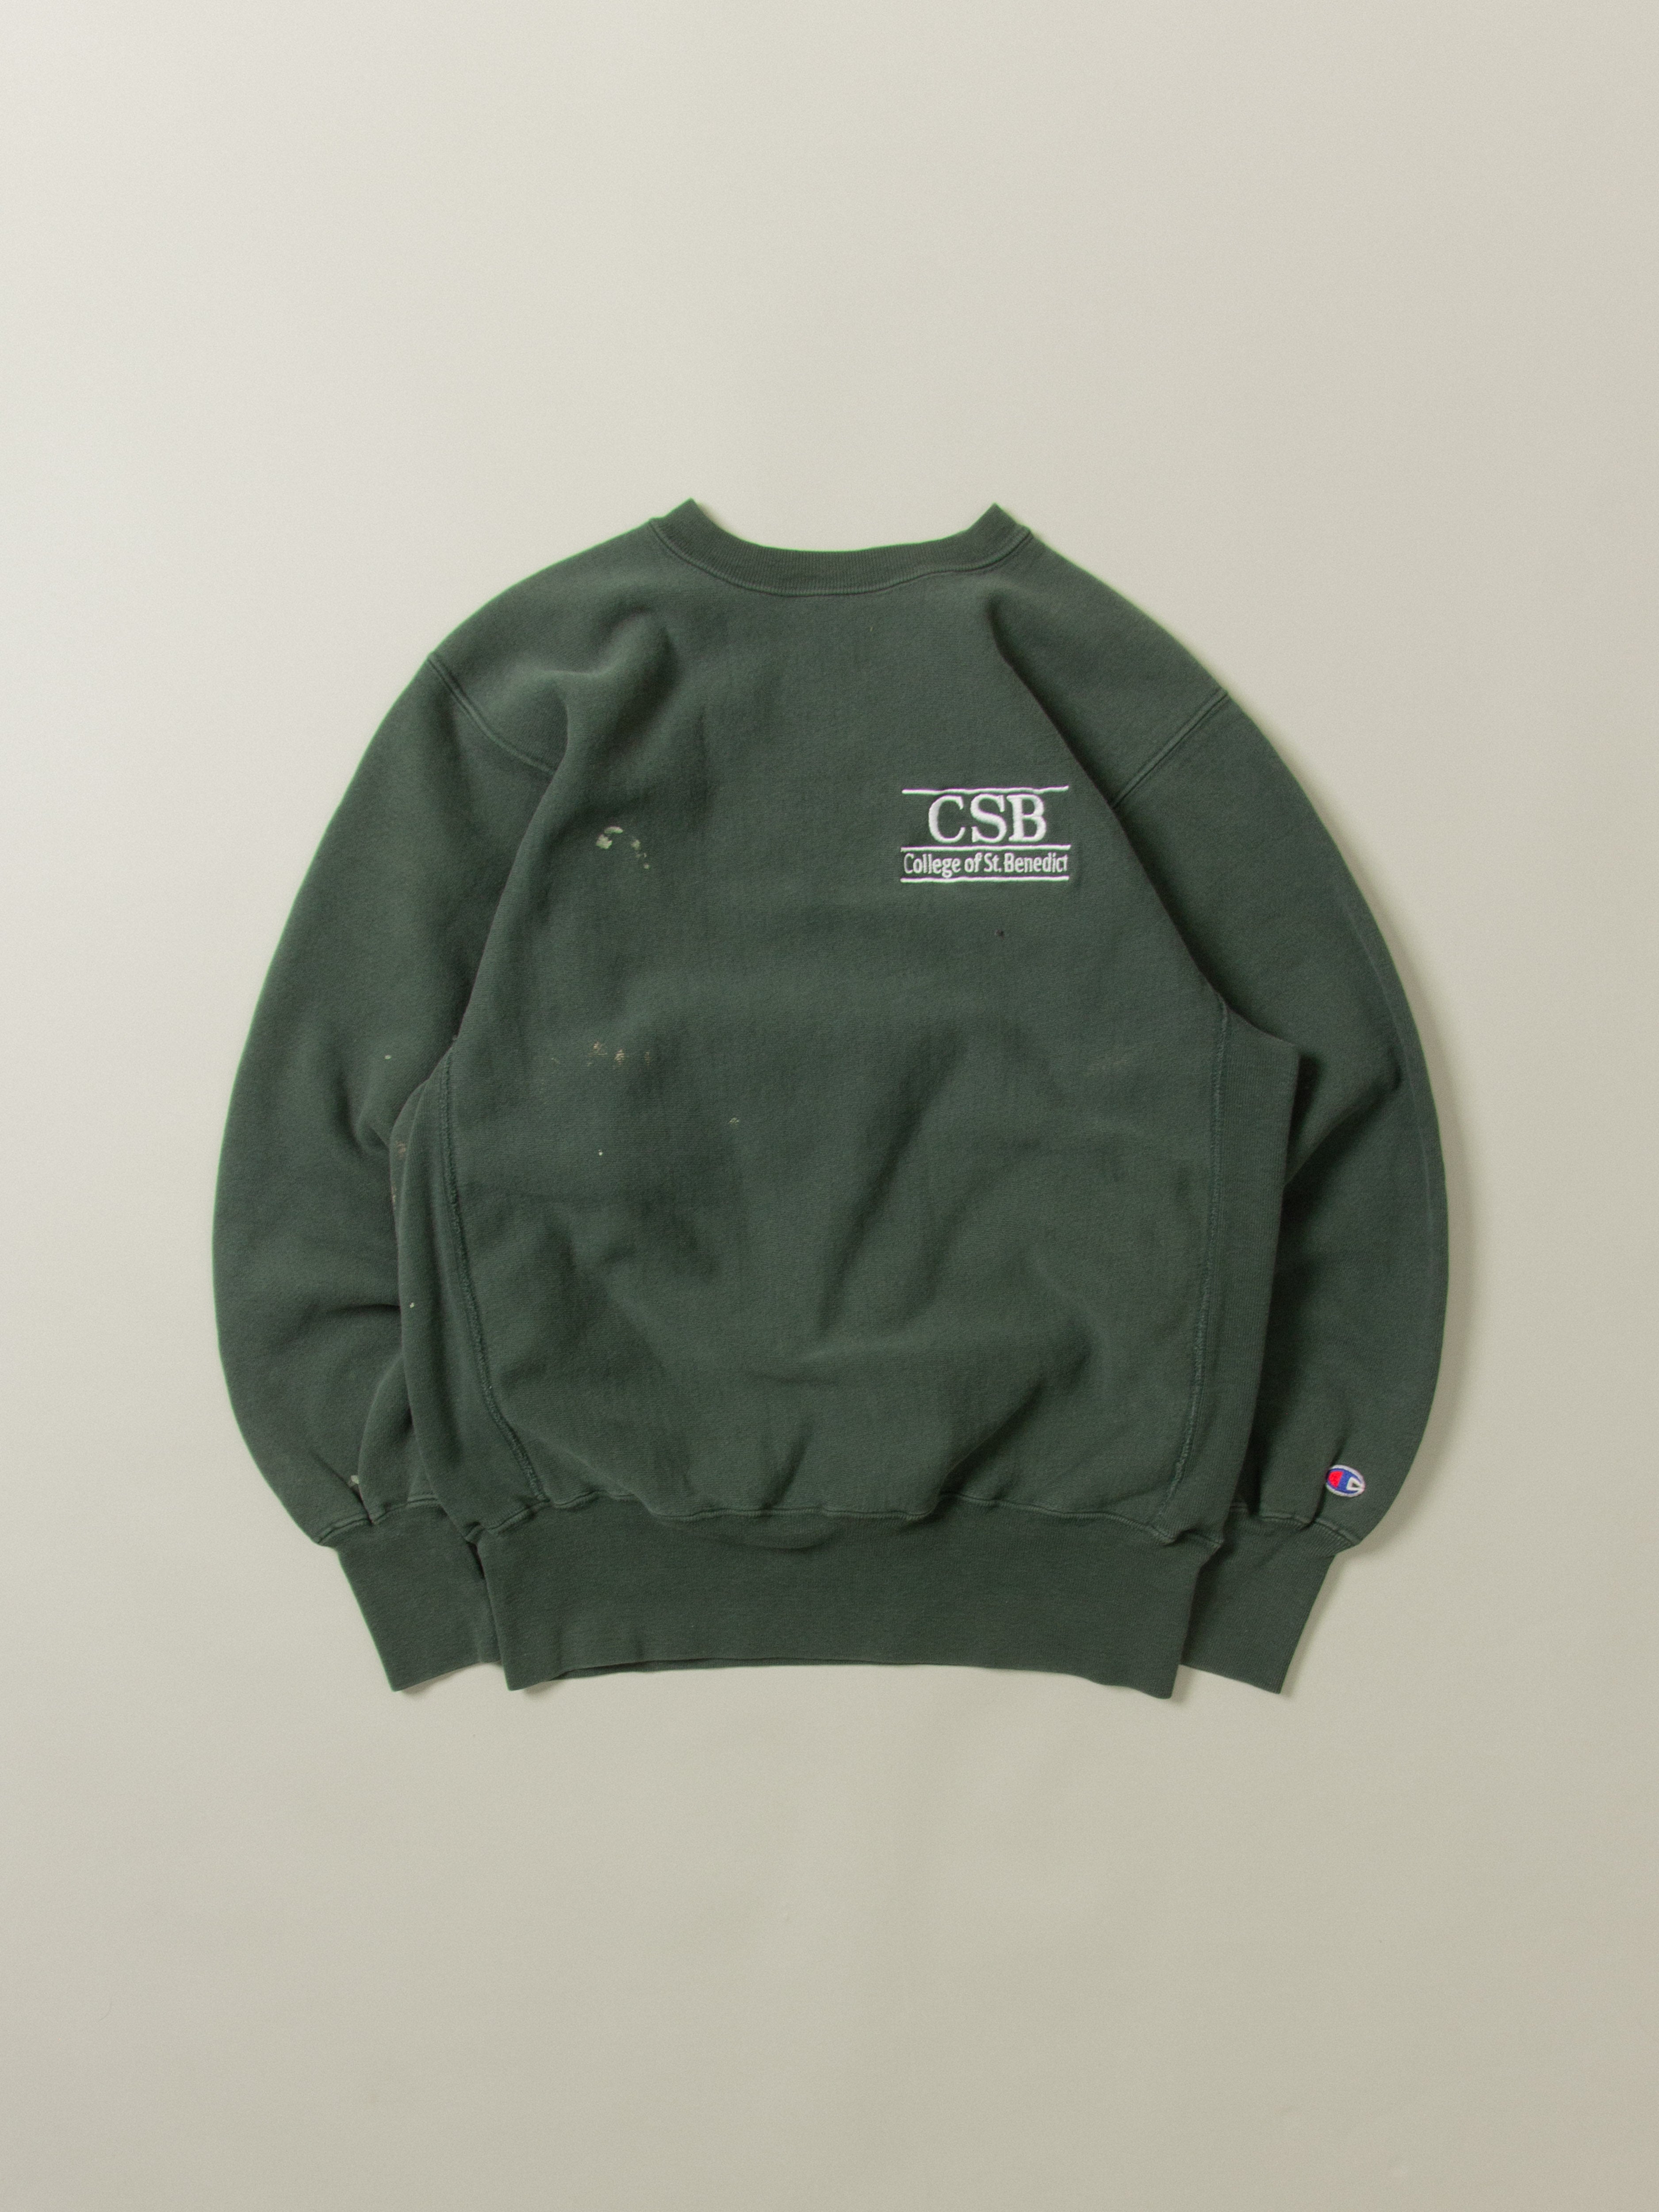 Vtg 1990s Champion Reverse Weave Sweatshirt - Made in USA (M)